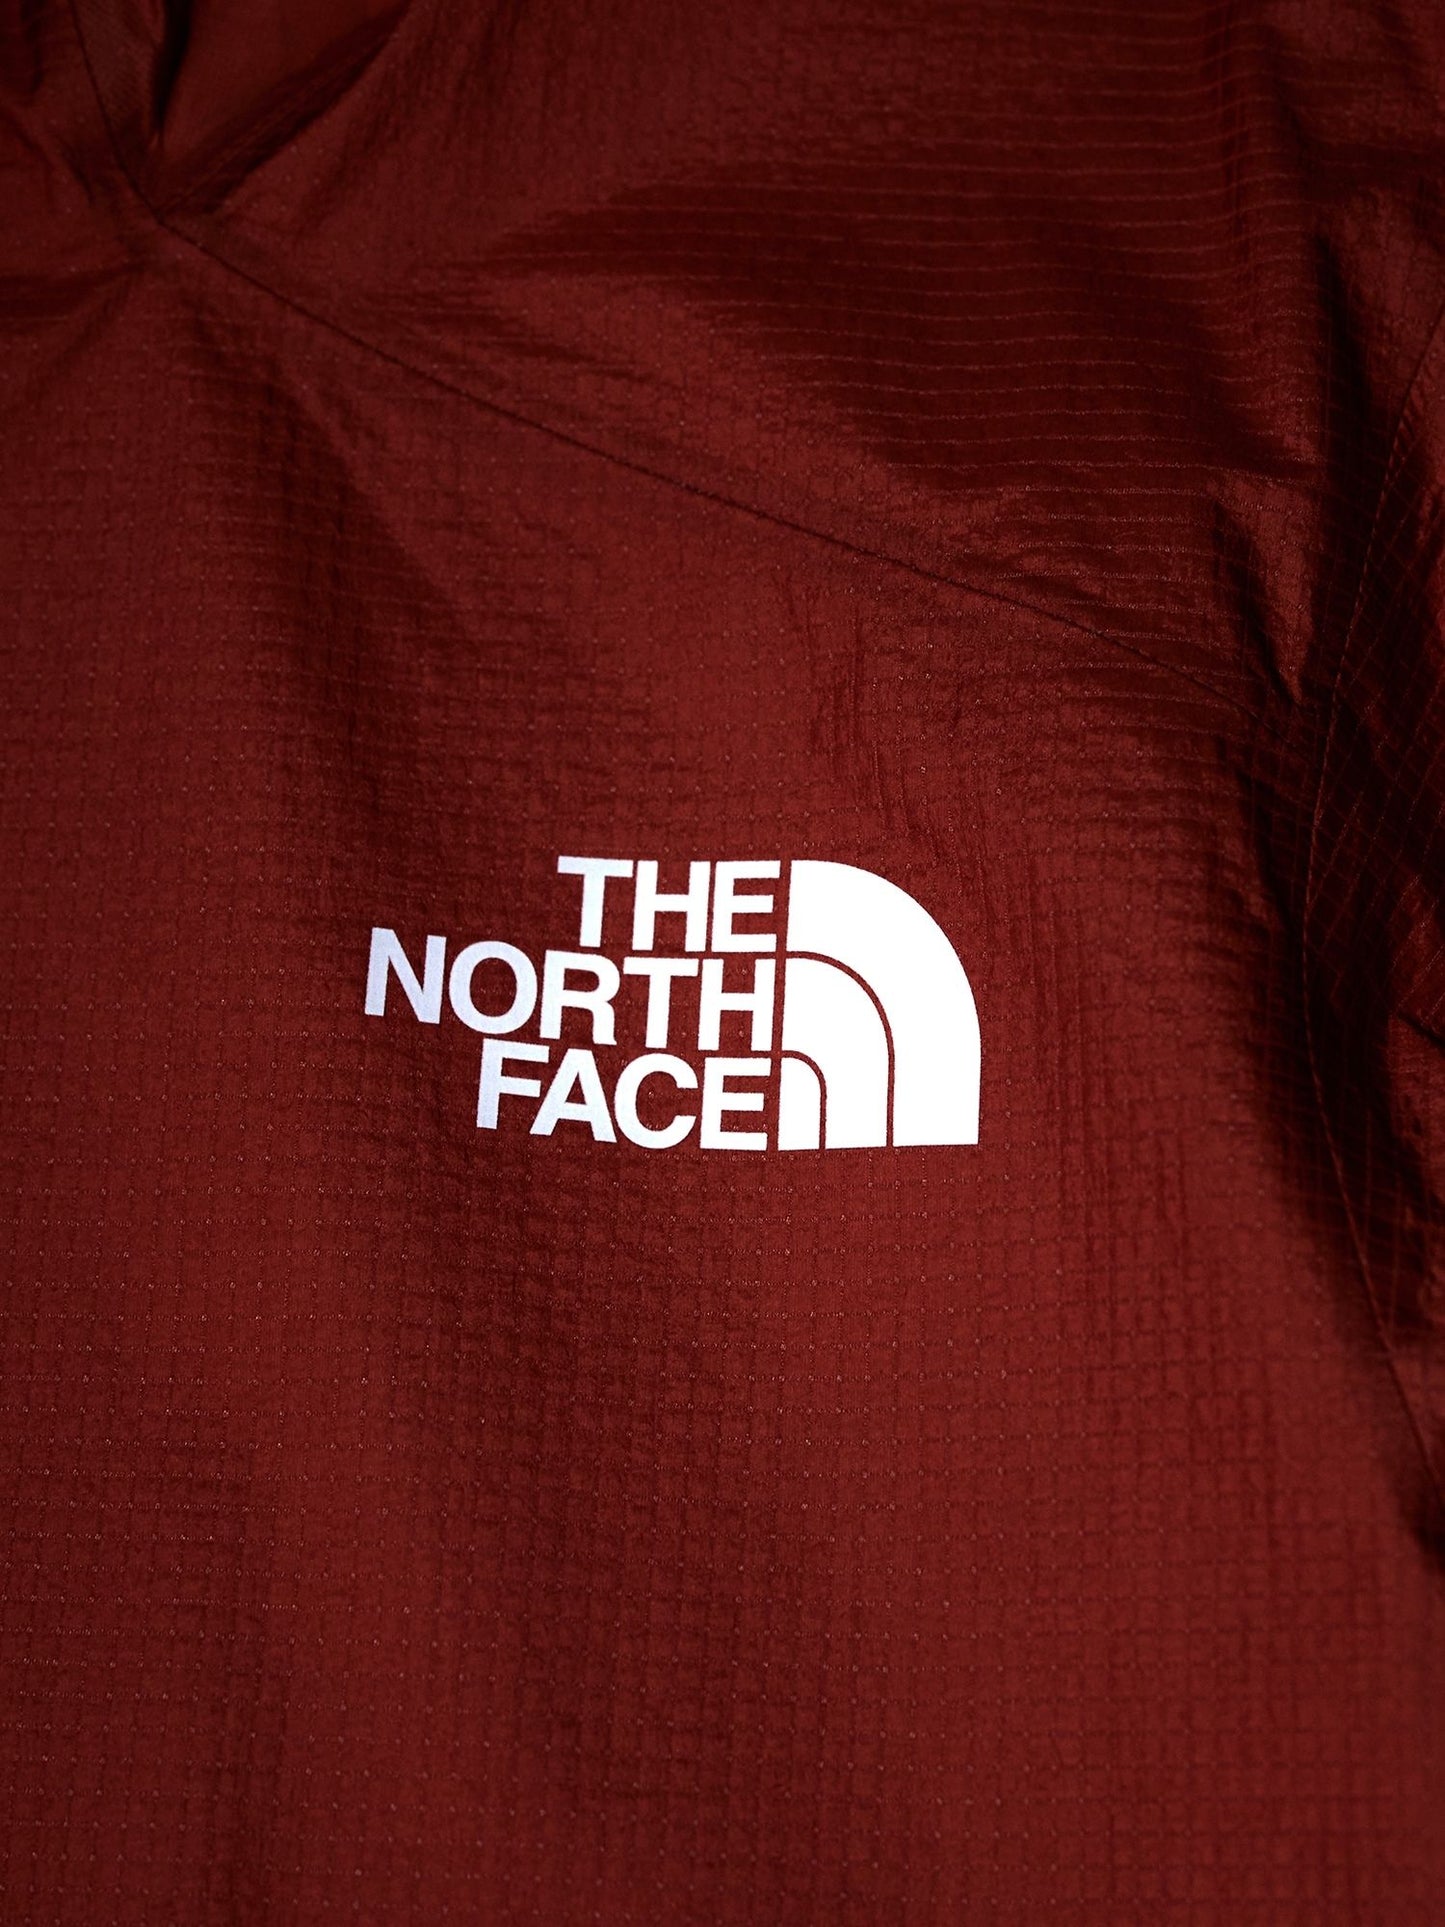 TheNorthFace(ザ・ノース・フェイス) Men's FL Parabola Jacket NP12472